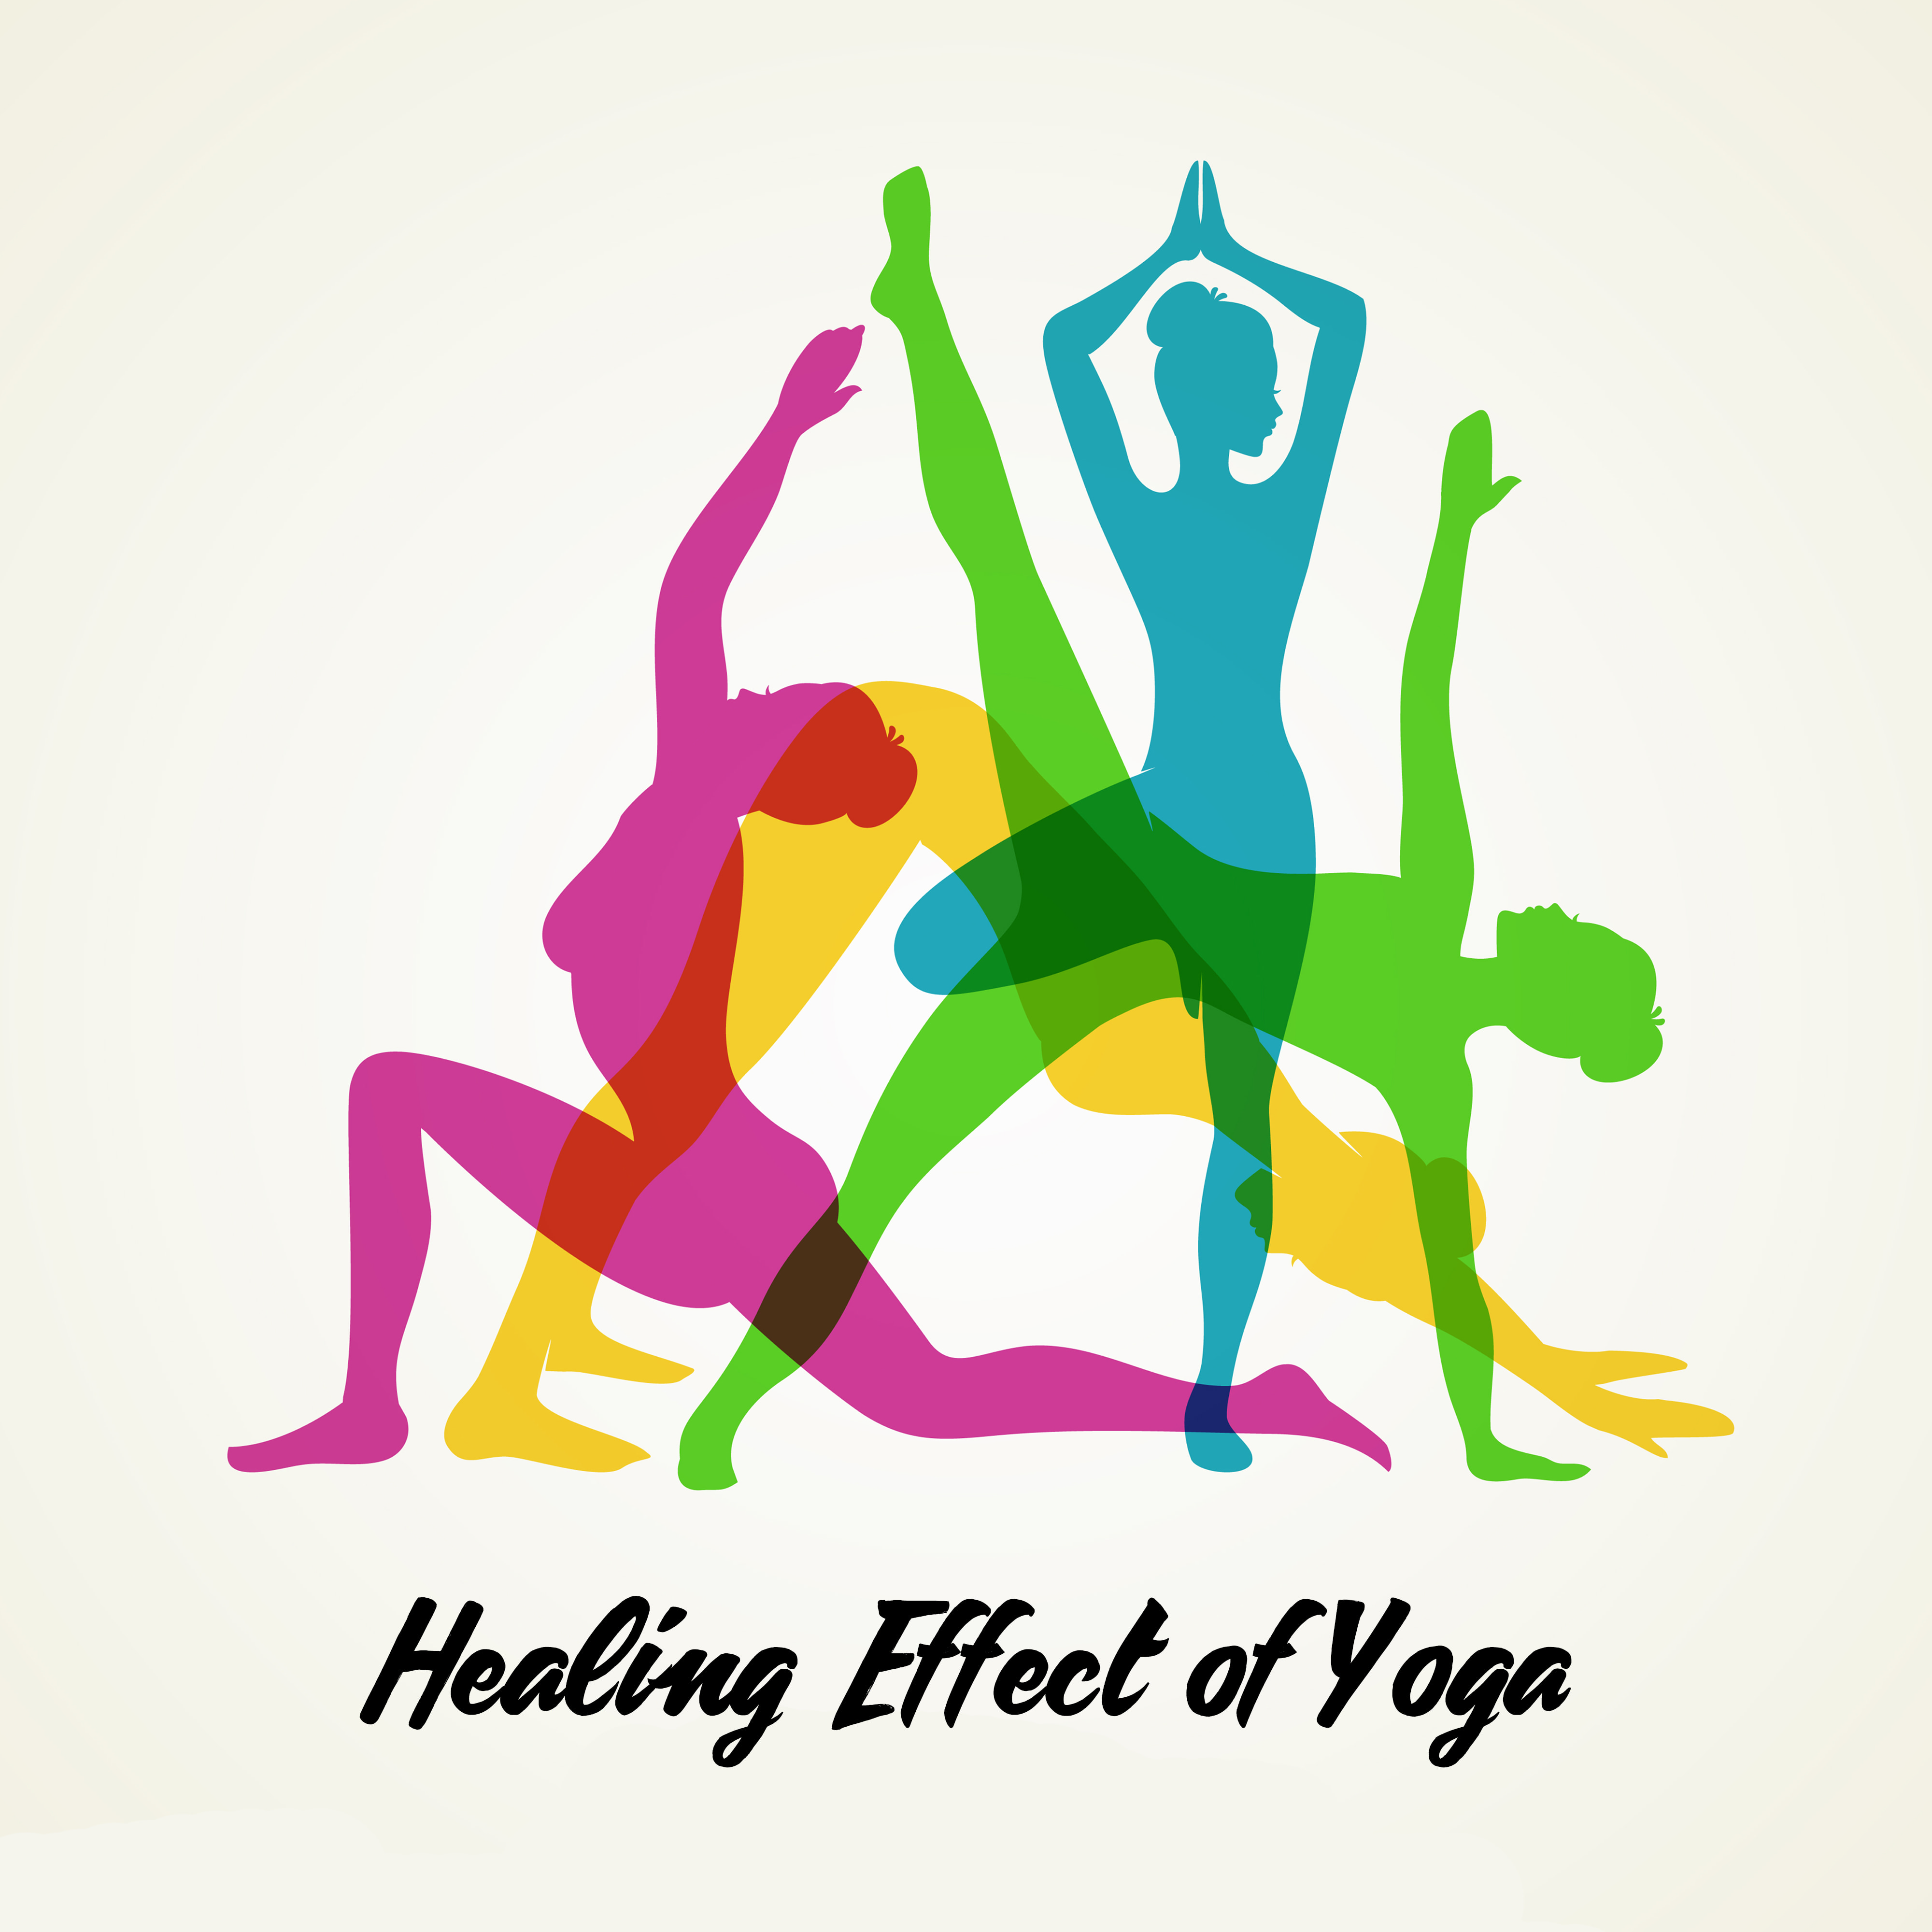 Healing Effect of Yoga